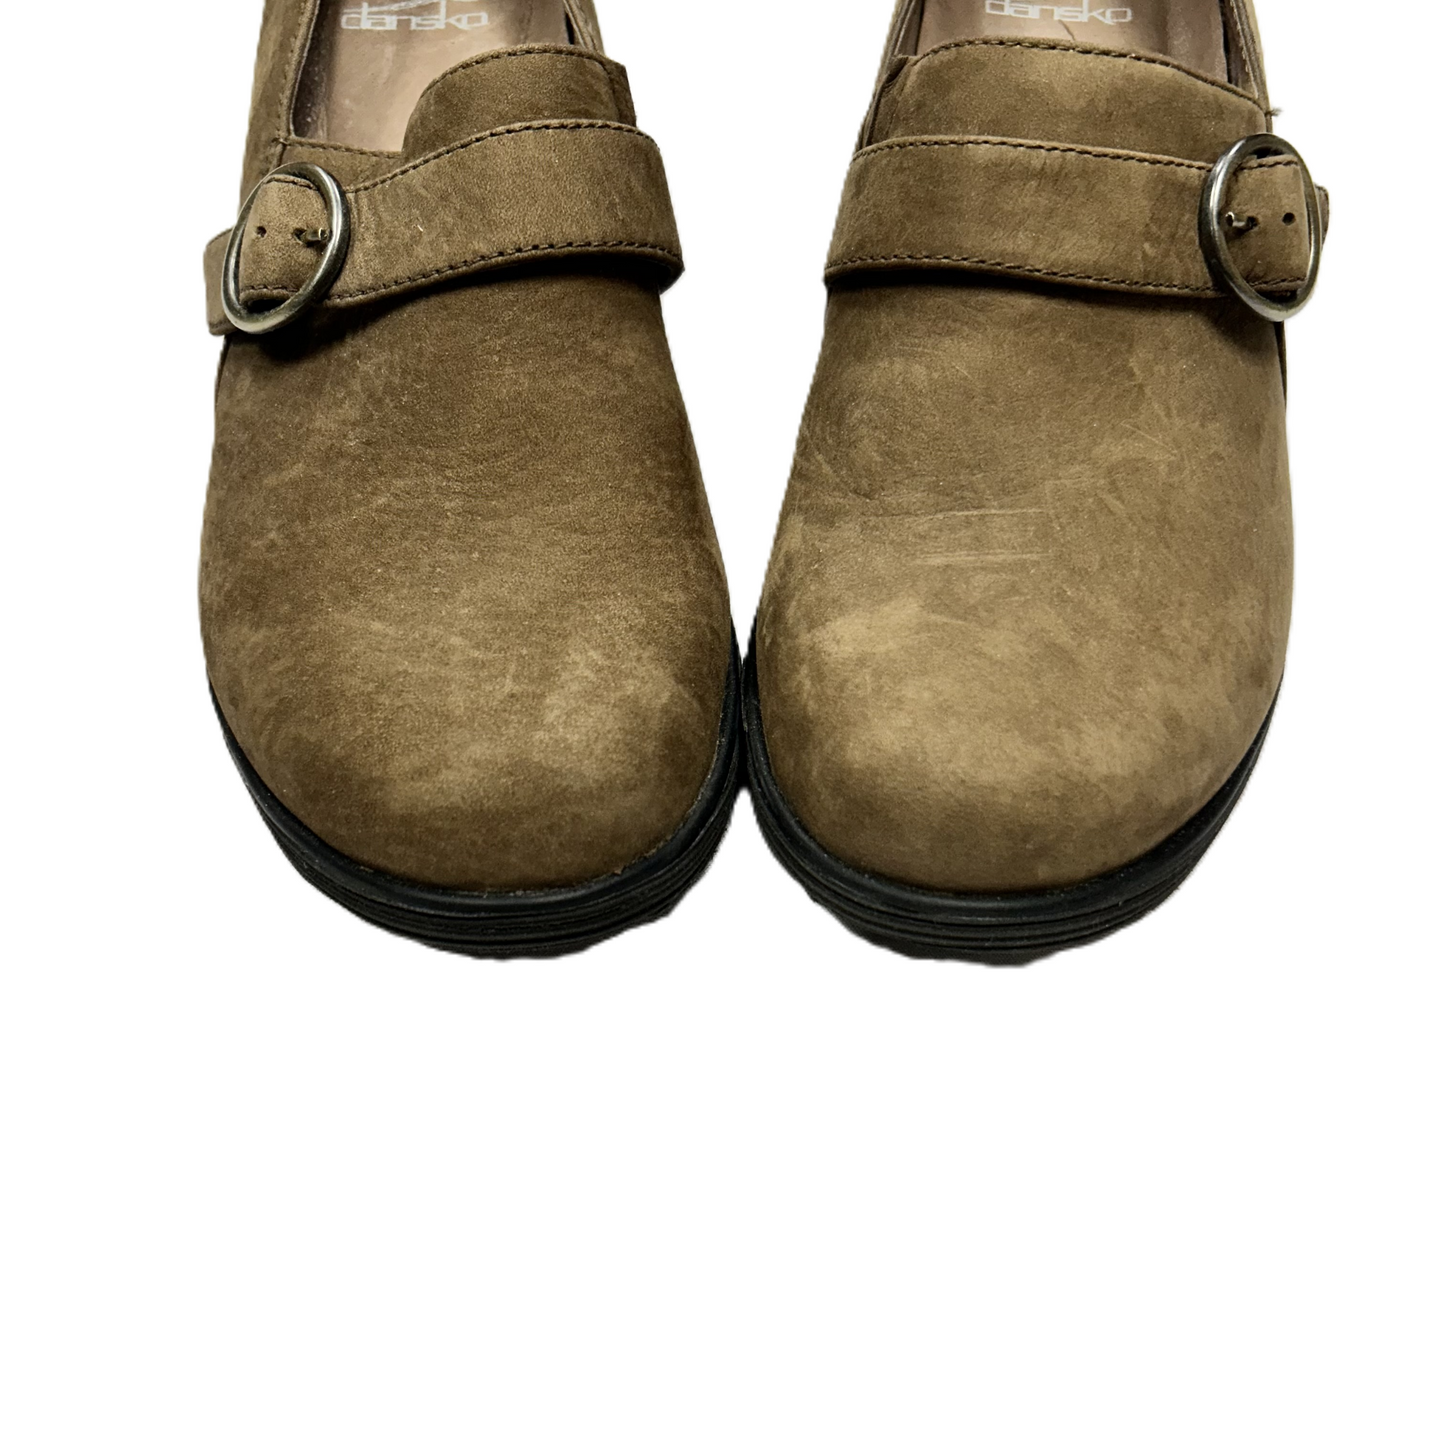 Shoes Heels Platform By Dansko  Size: 10